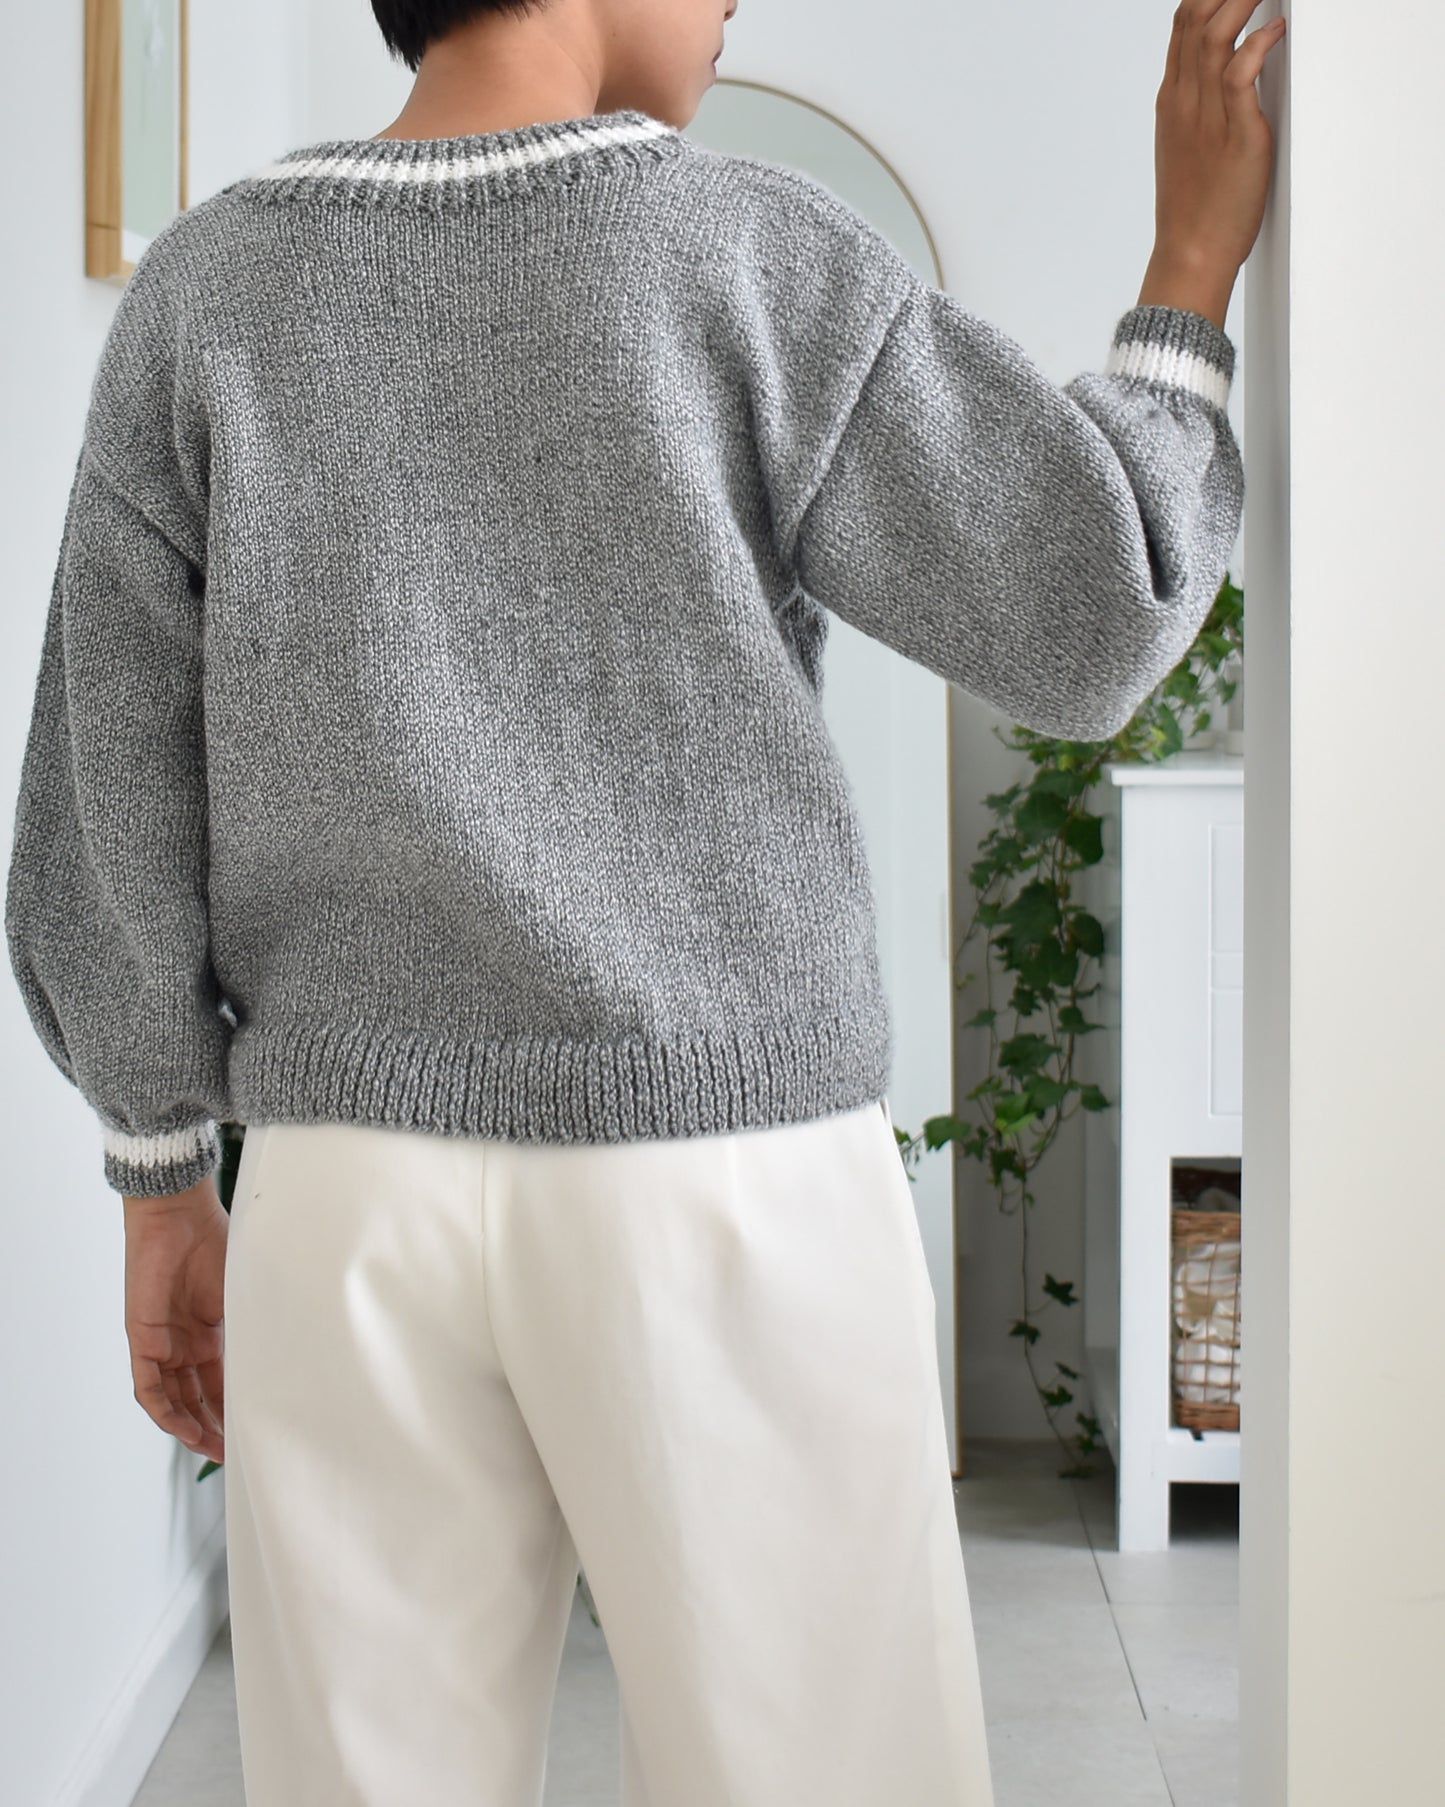 Sweater No.13 | Easy knitting pattern